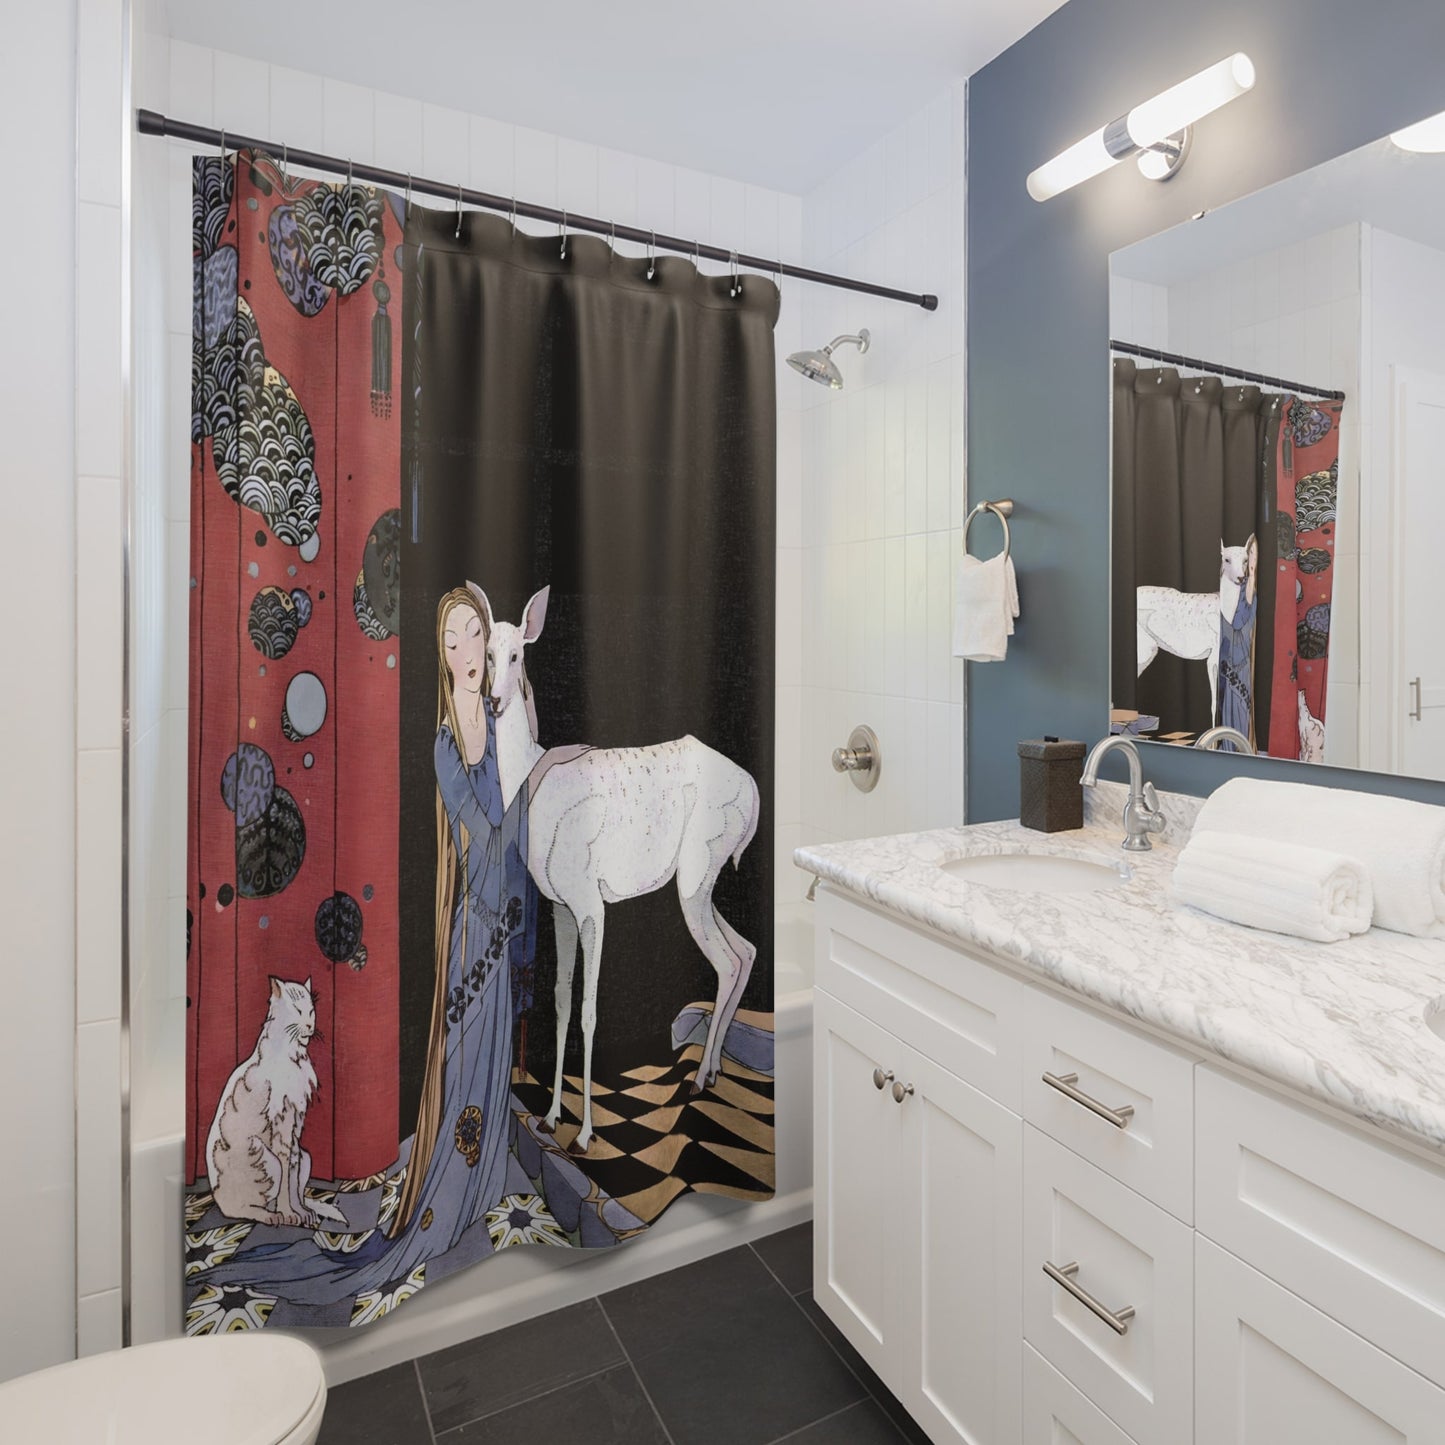 Fairytale Book Shower Curtain Best Bathroom Decorating Ideas for Art Nouveau Decor